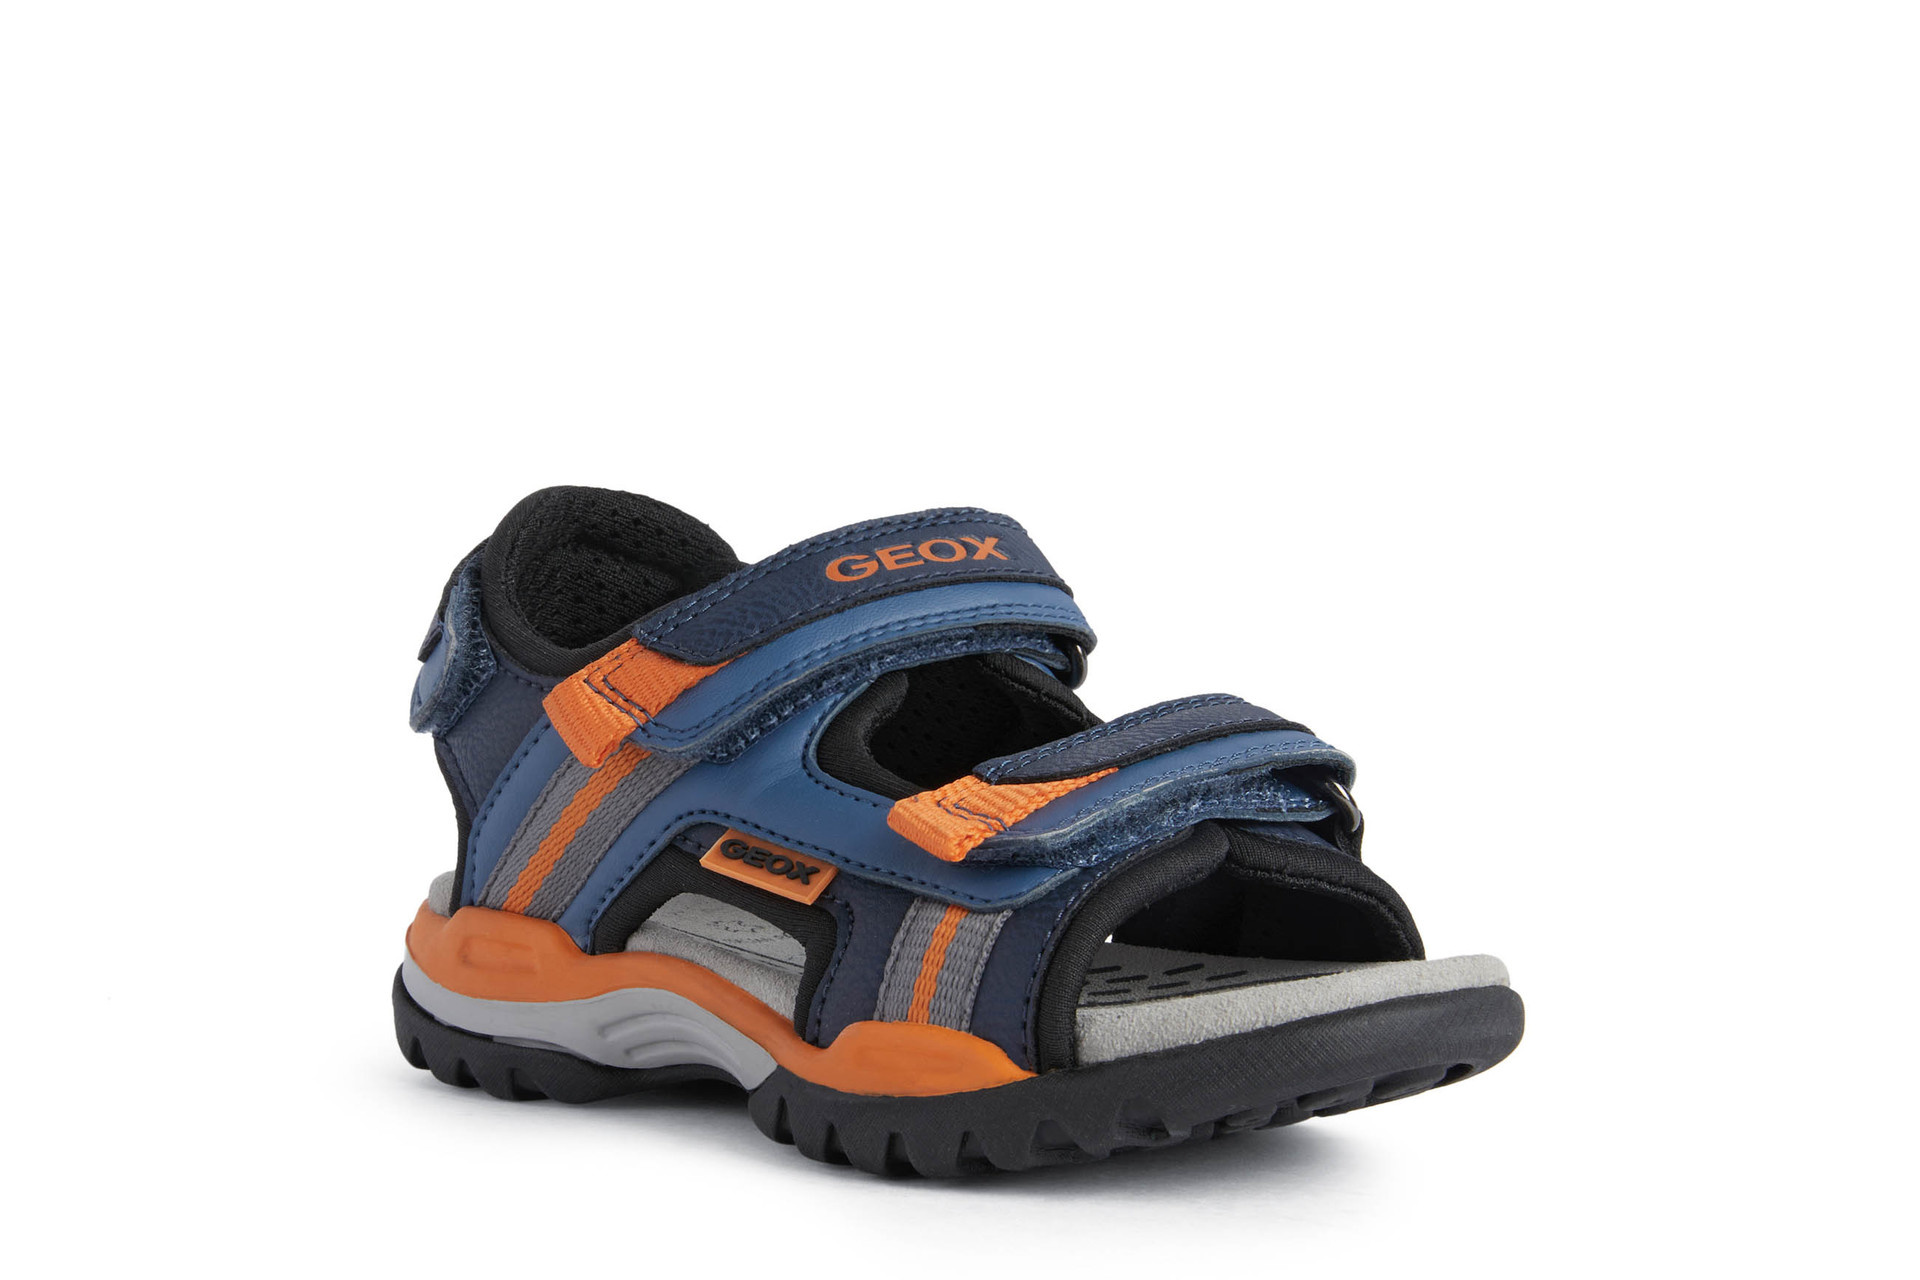 Geox Boys Borealis Dark Blue/Orange Sandals - Shoes for Children